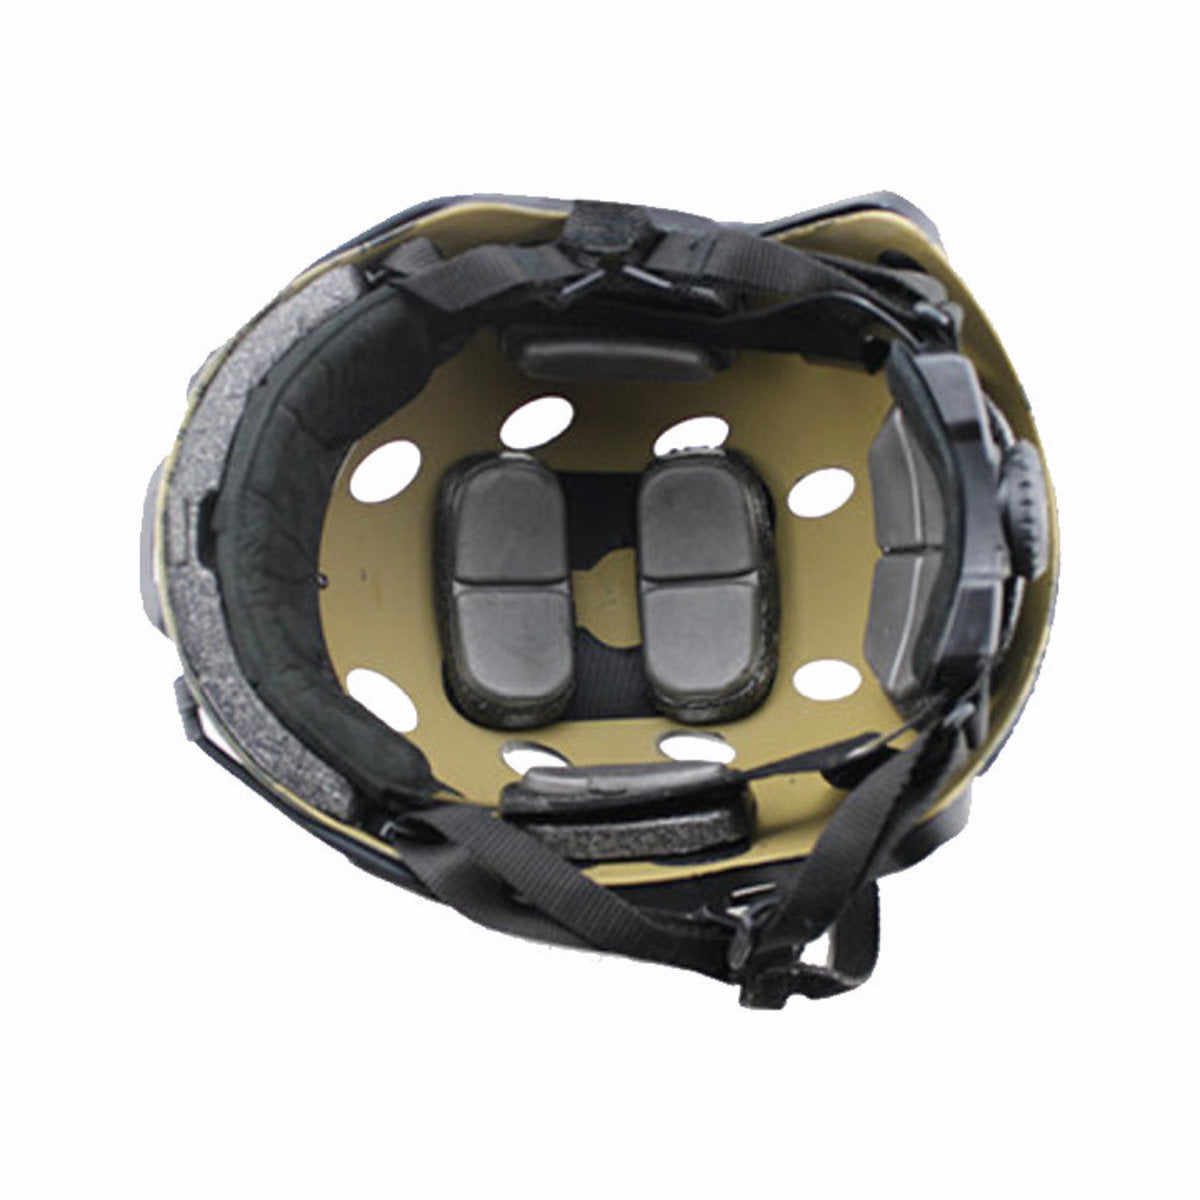 Valken ATH Enhanced Tactical Airsoft Helmet - Black - Valken